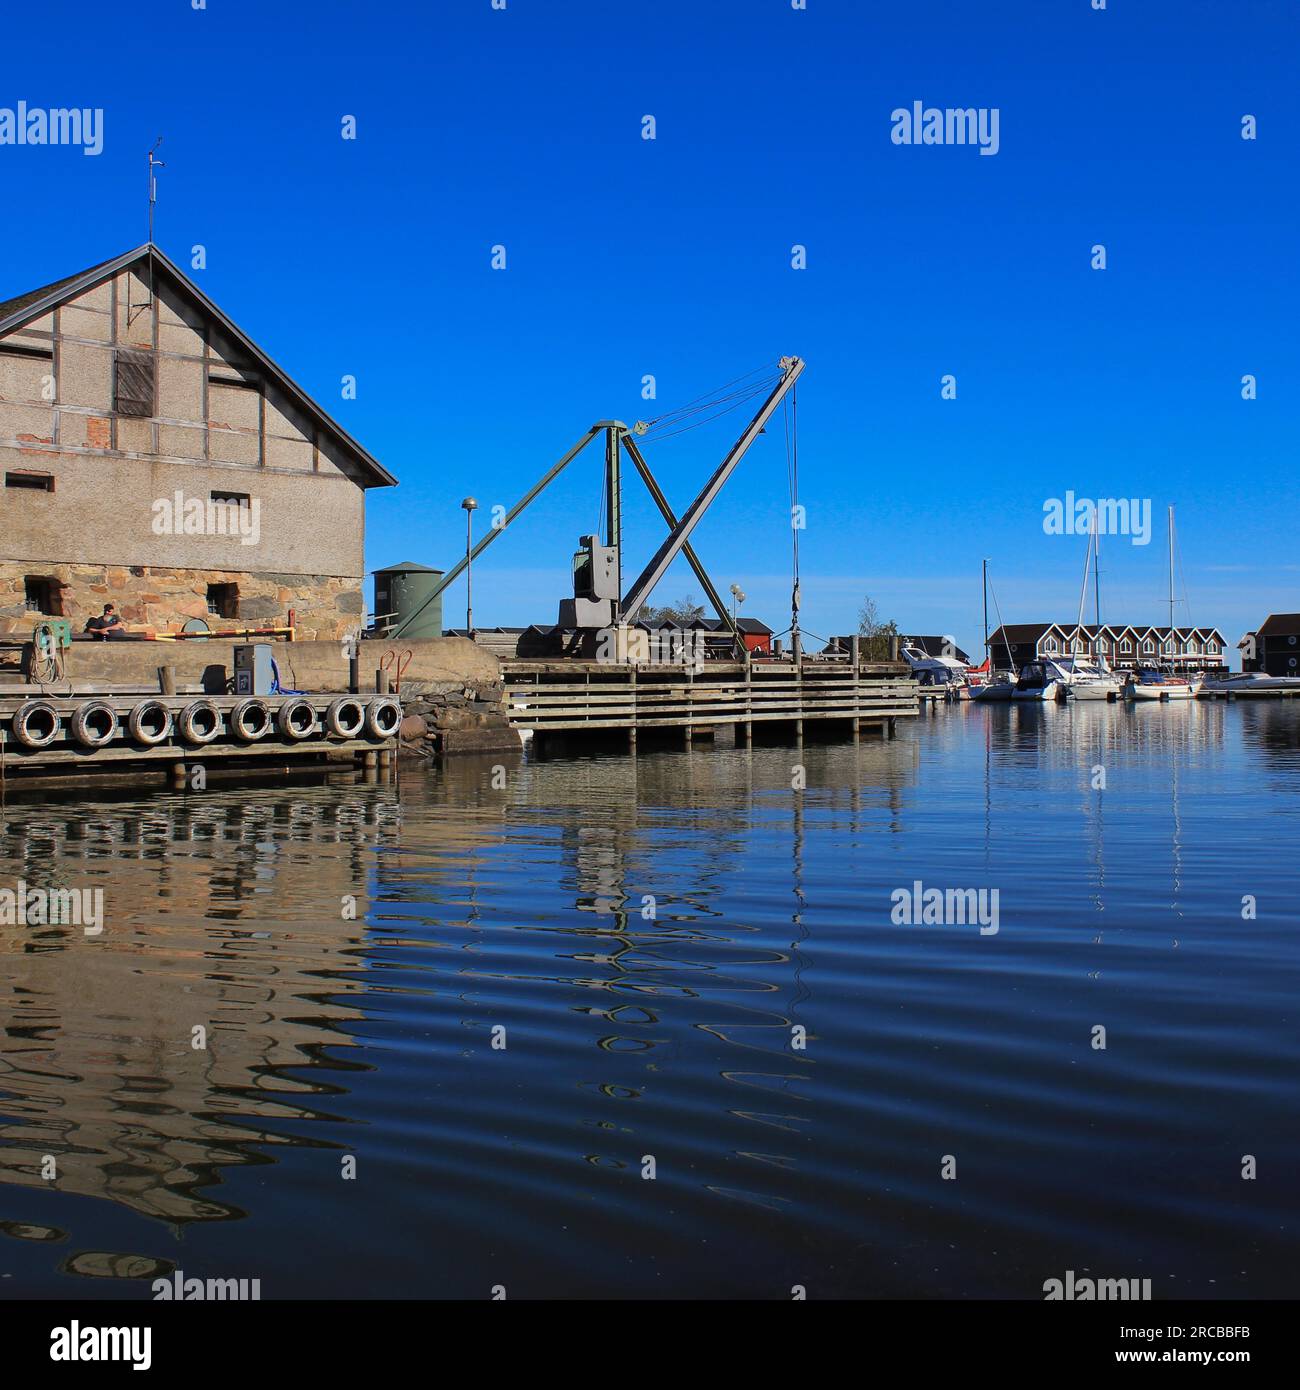 Sunnana Hamn, small harbour in Mellerud, Sweden Stock Photo